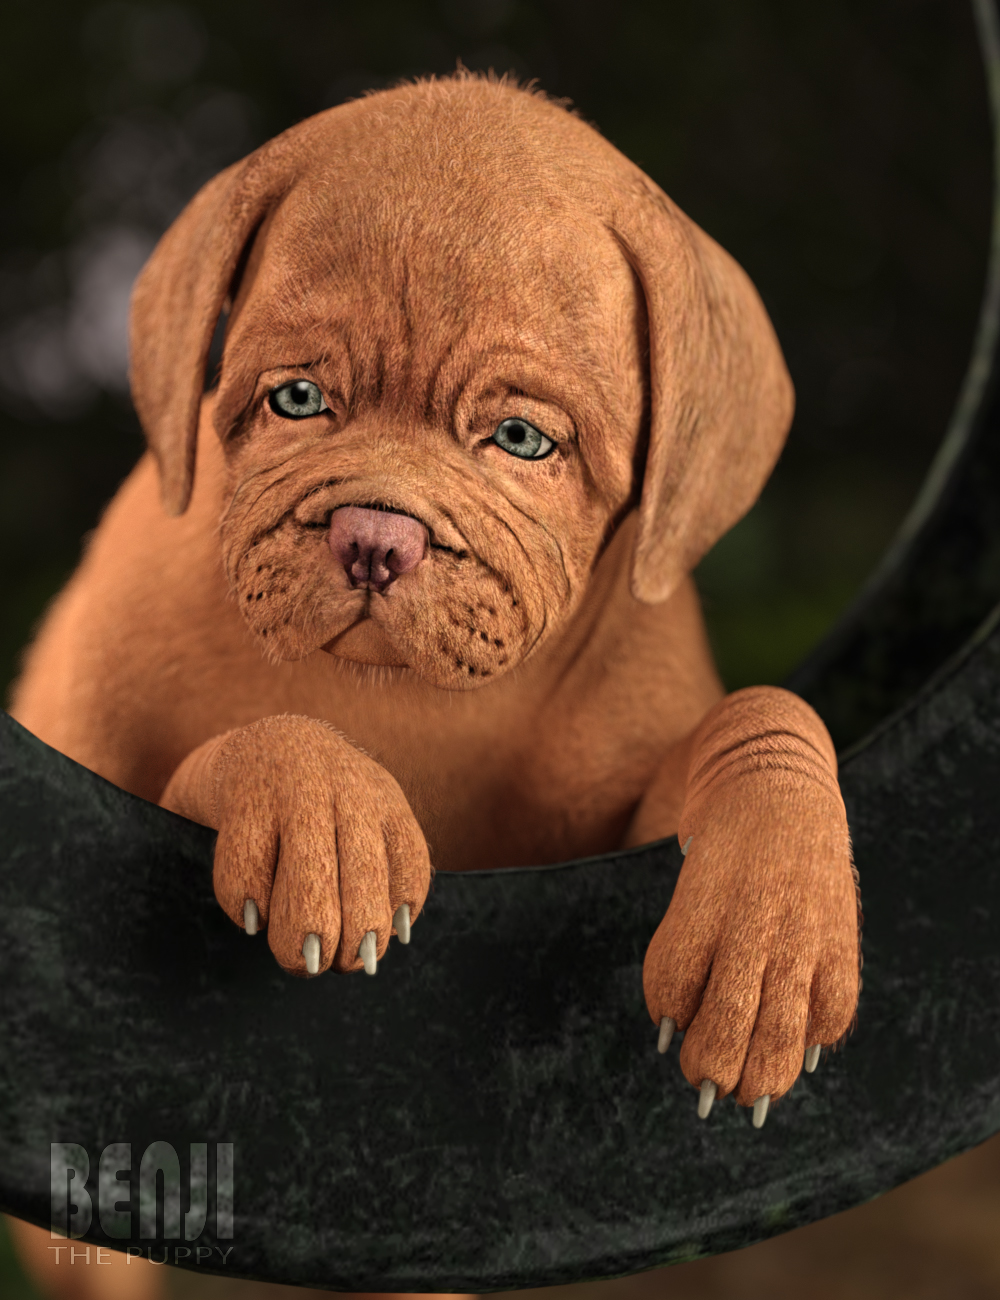 Benji The Puppy HD for Daz Dog 8 [REPOST]